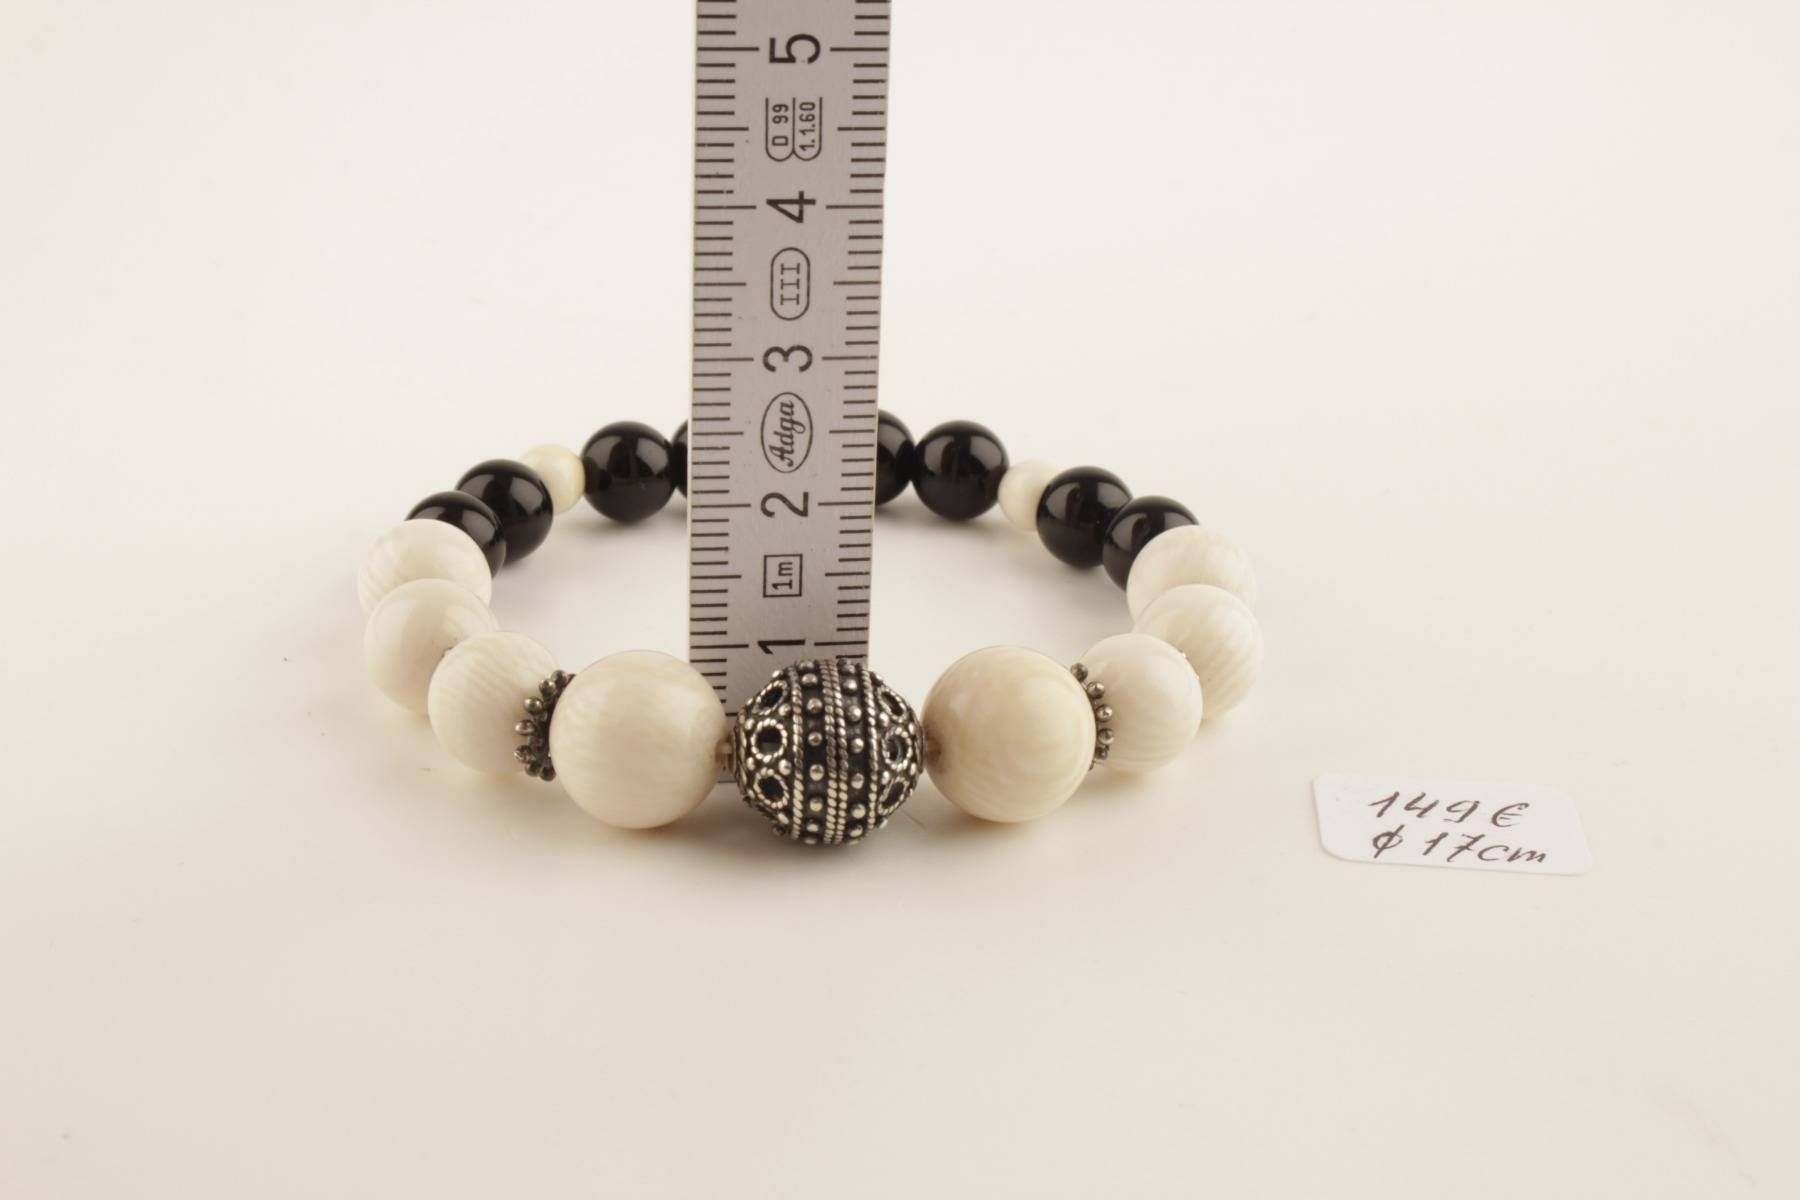 The Tibet Black Mammoth & Black Onyx bracelet